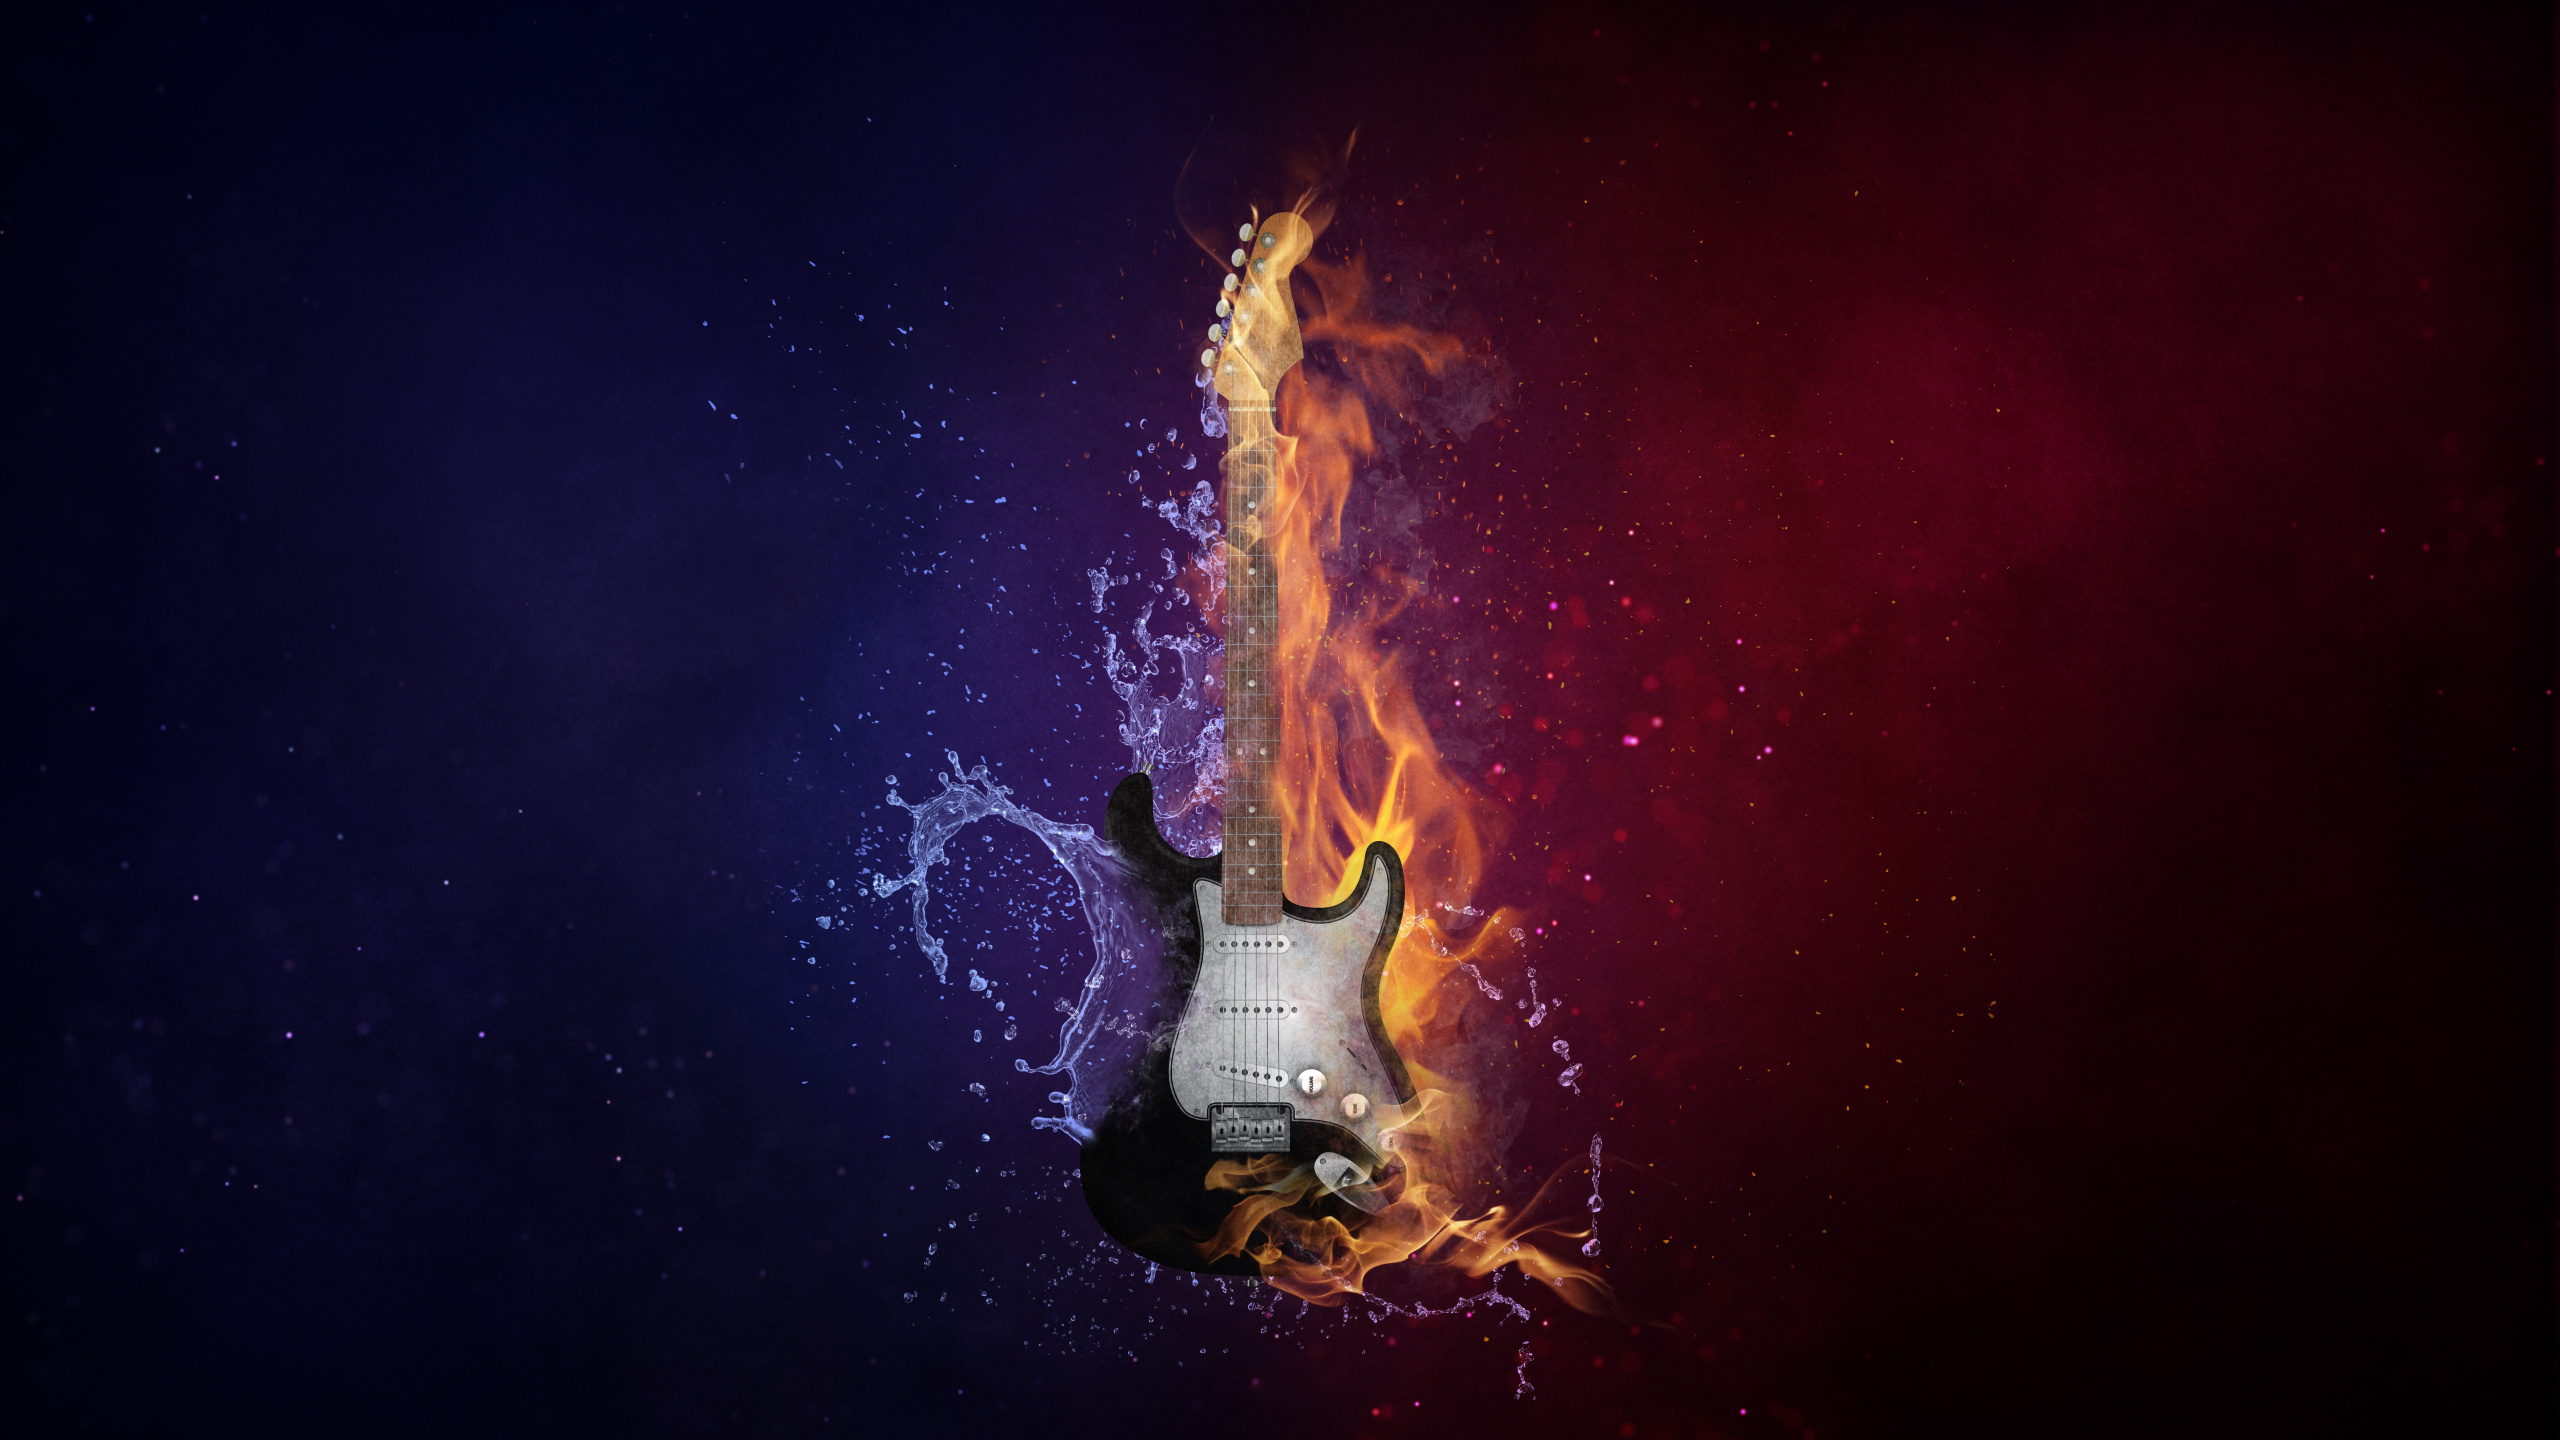 Guitare, Chaleur, Flamme, Obscurité, Feu. Wallpaper in 2560x1440 Resolution